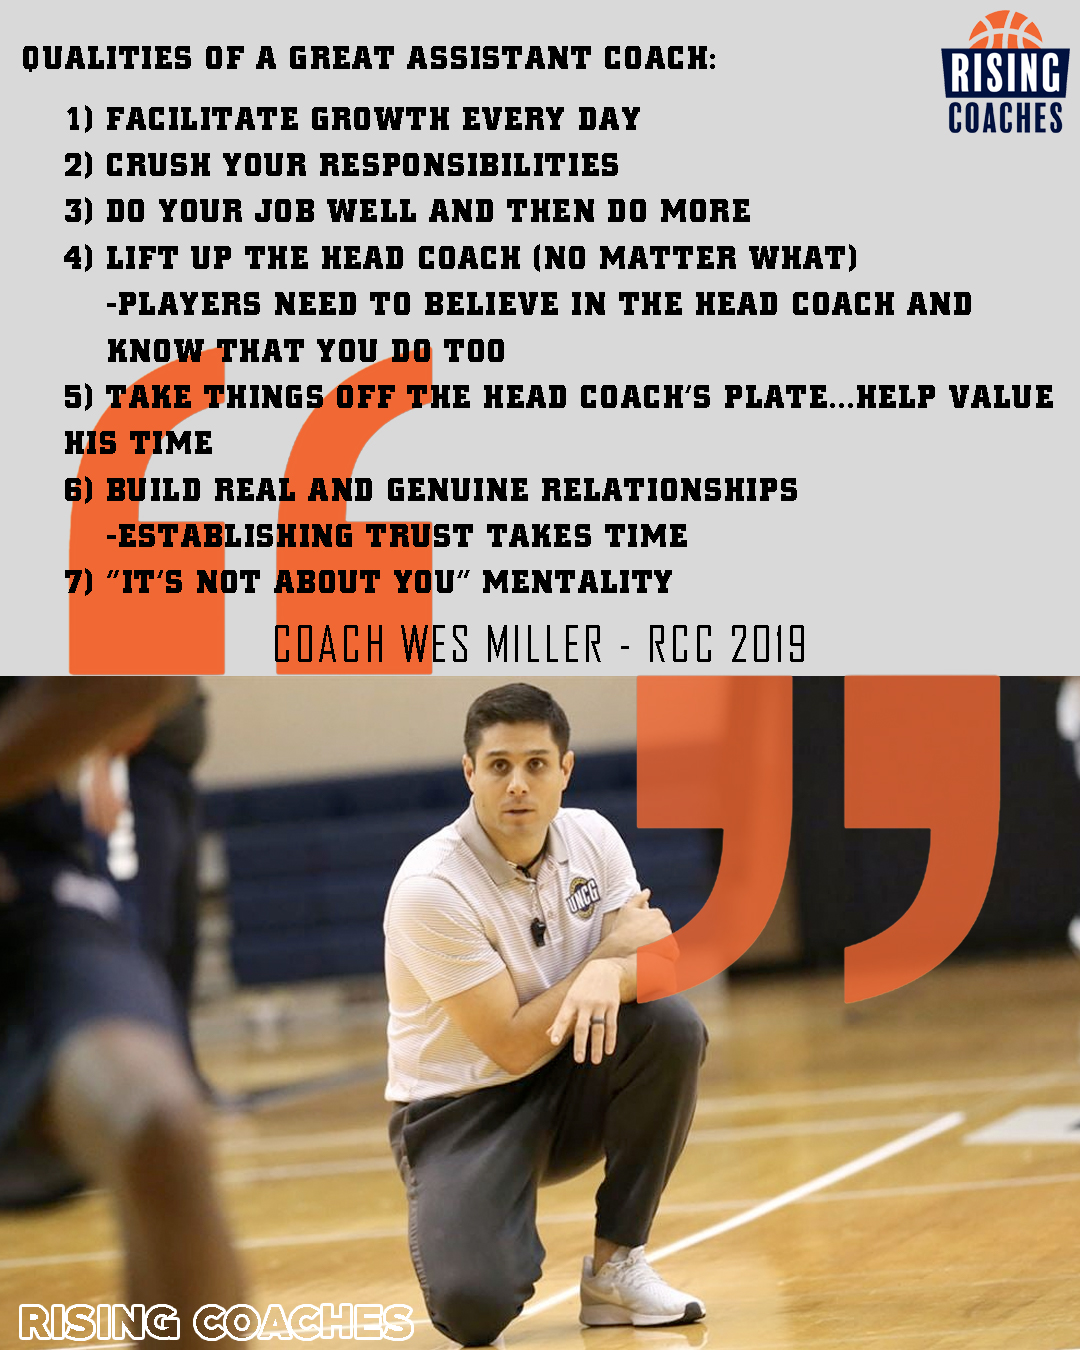 Miller - AC Qualities